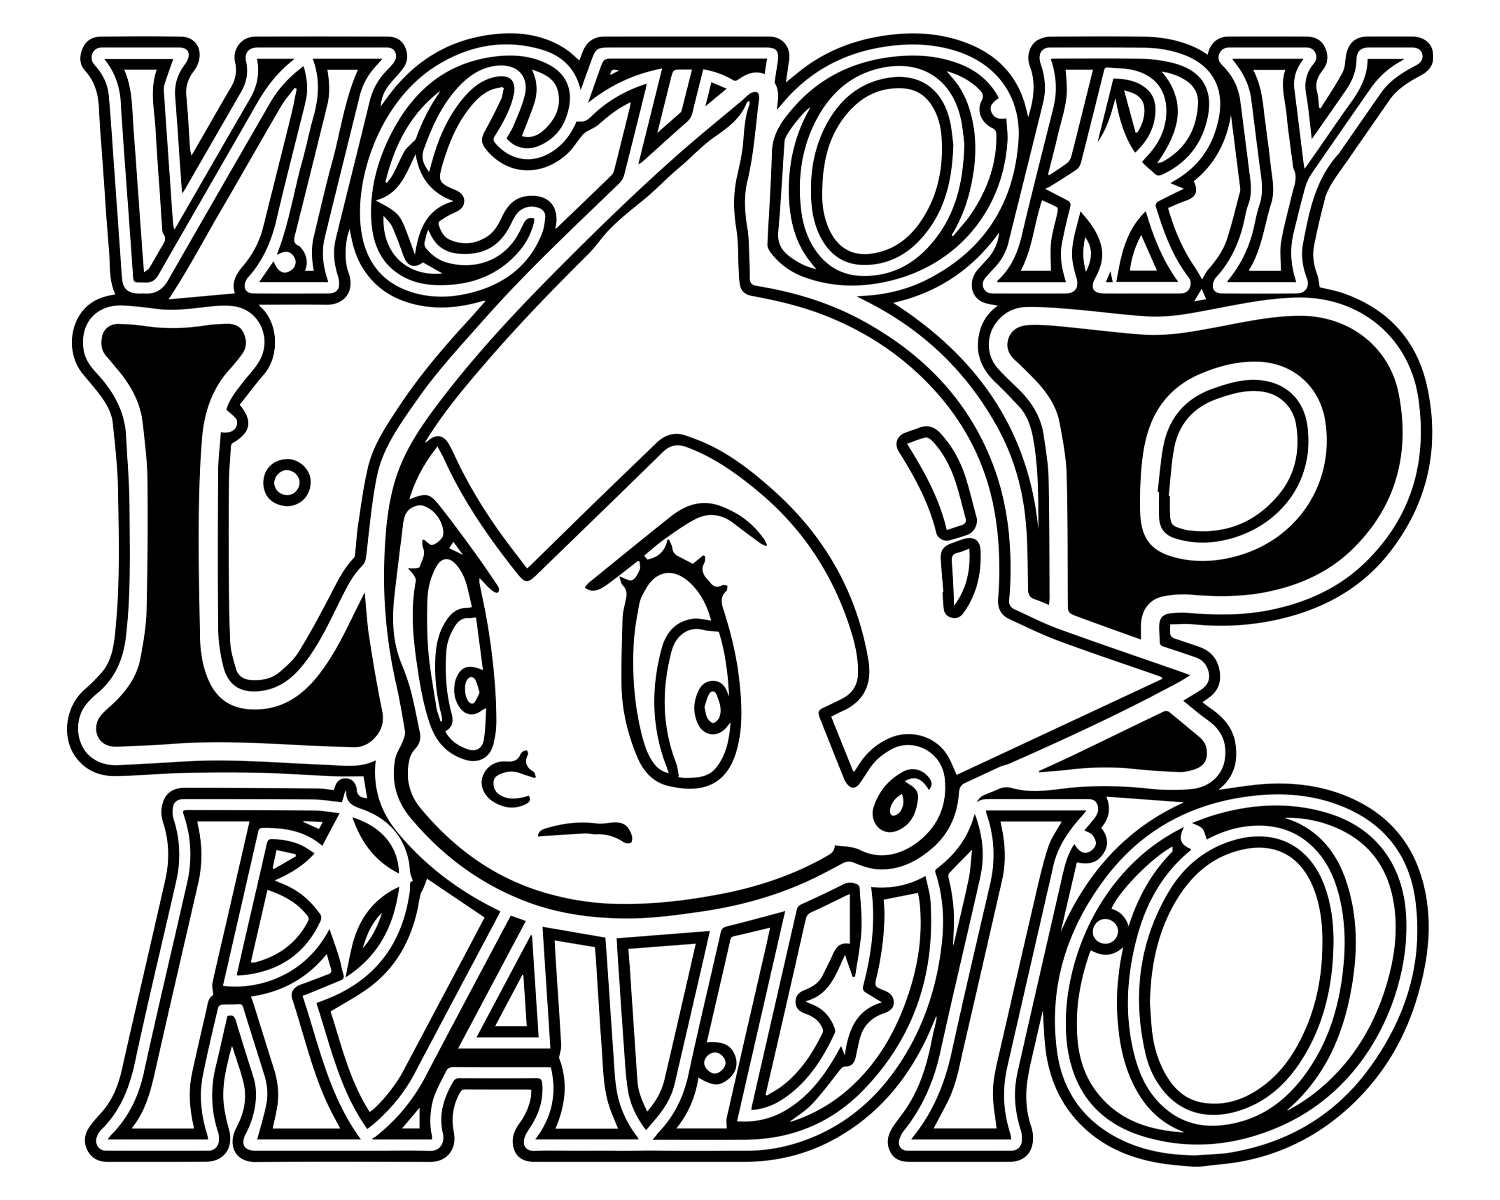 victorylapradio Home